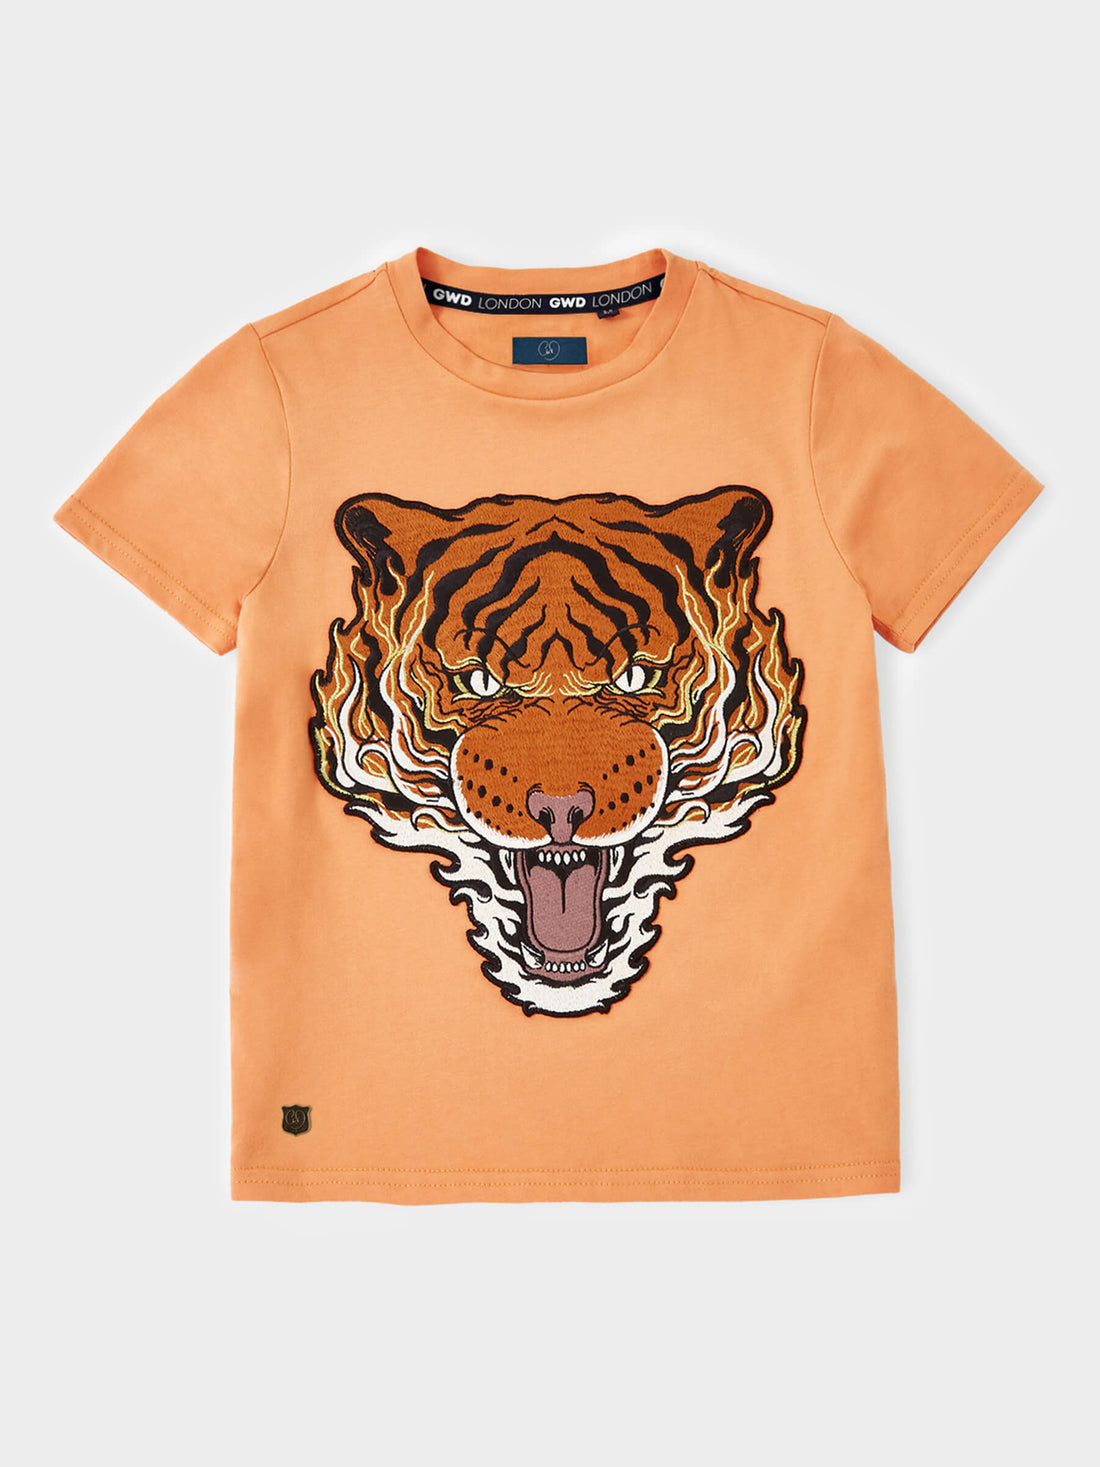 Shere Khan T-Shirt | GWD Fashion